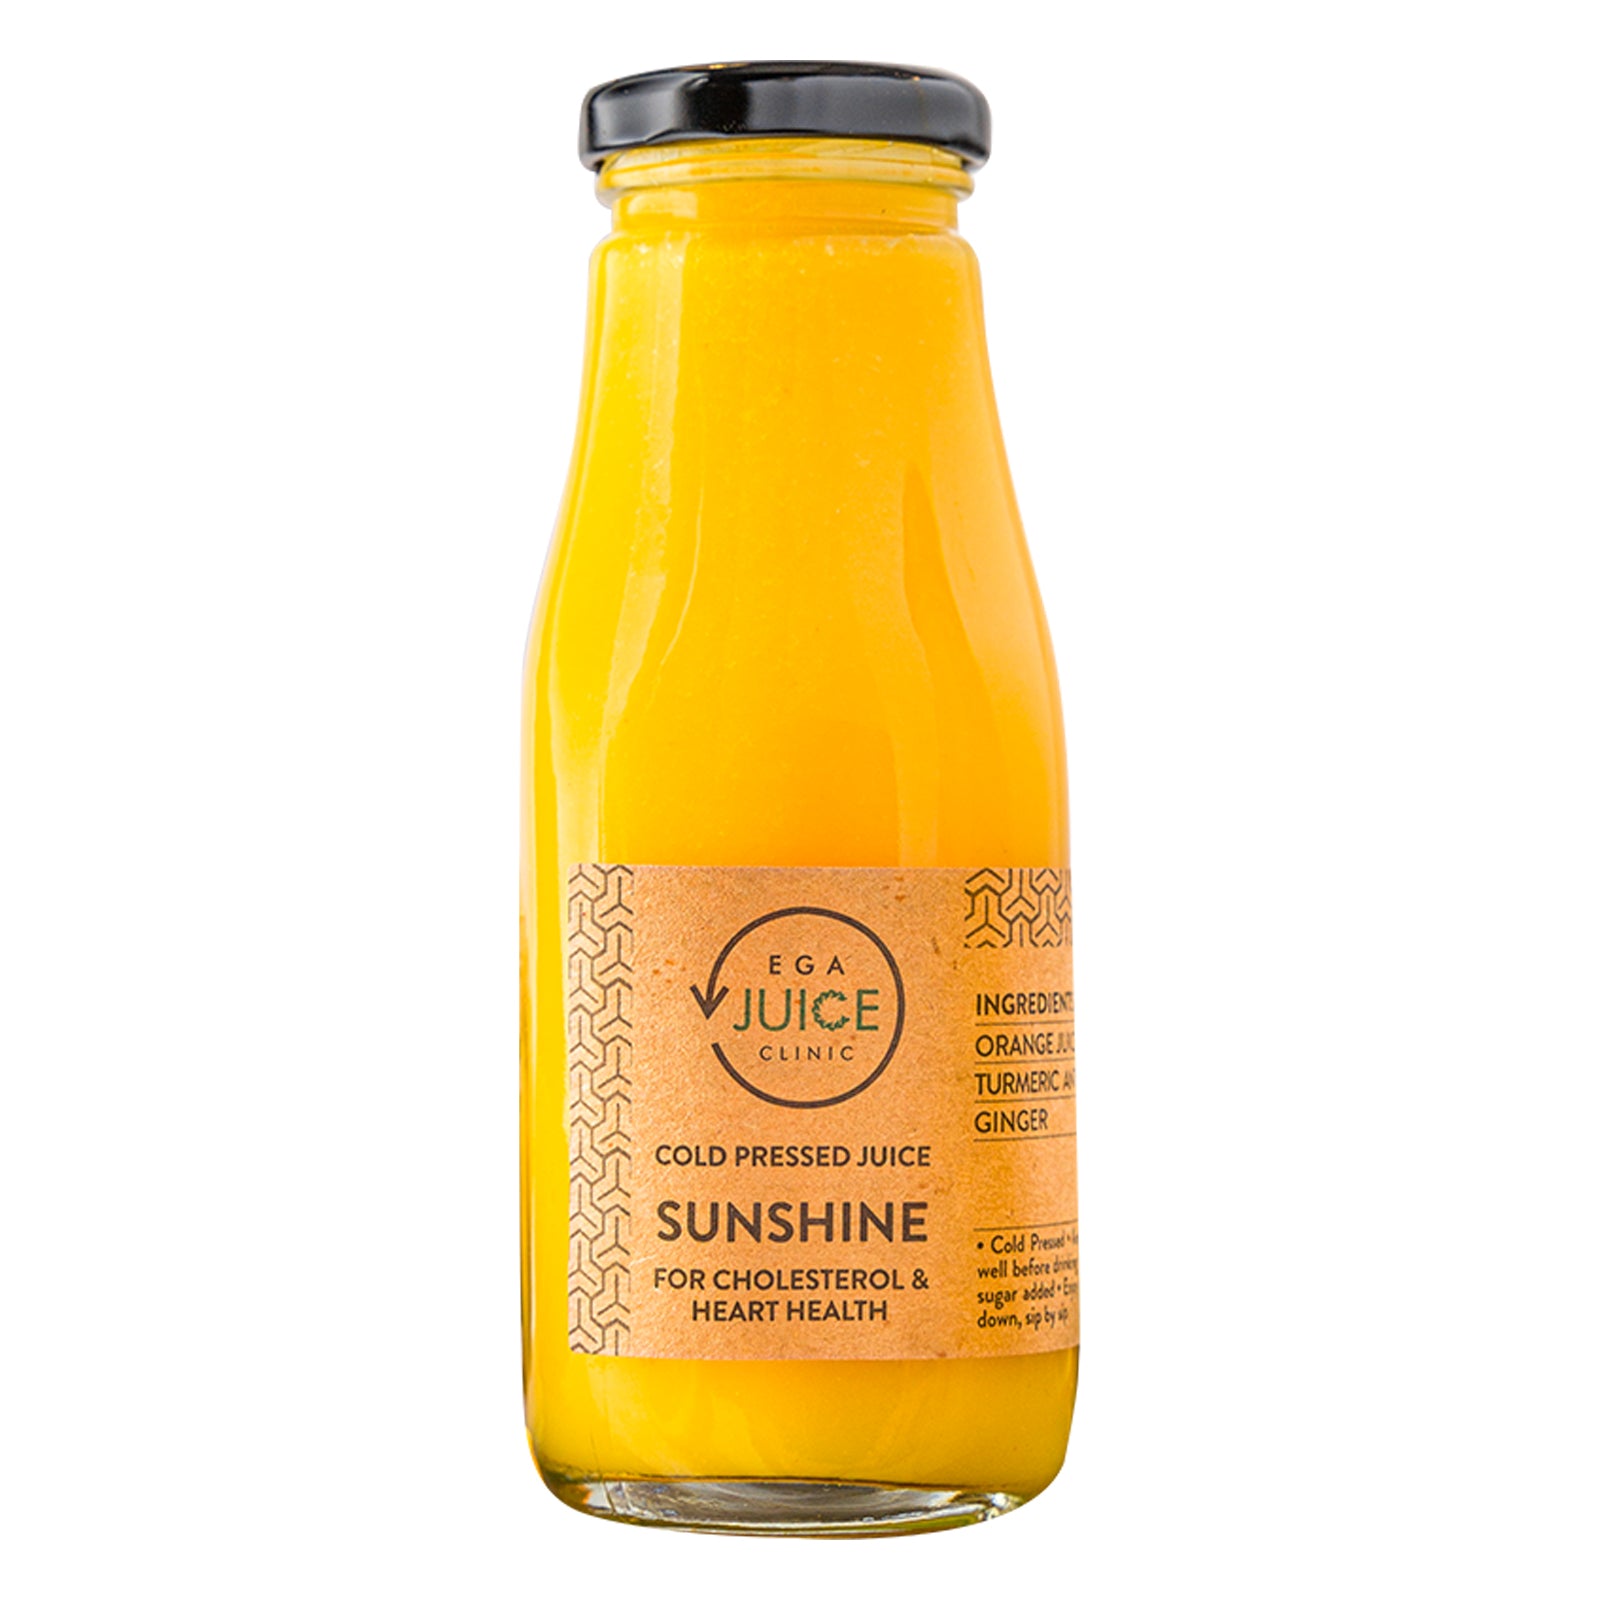 Sunshine Juice